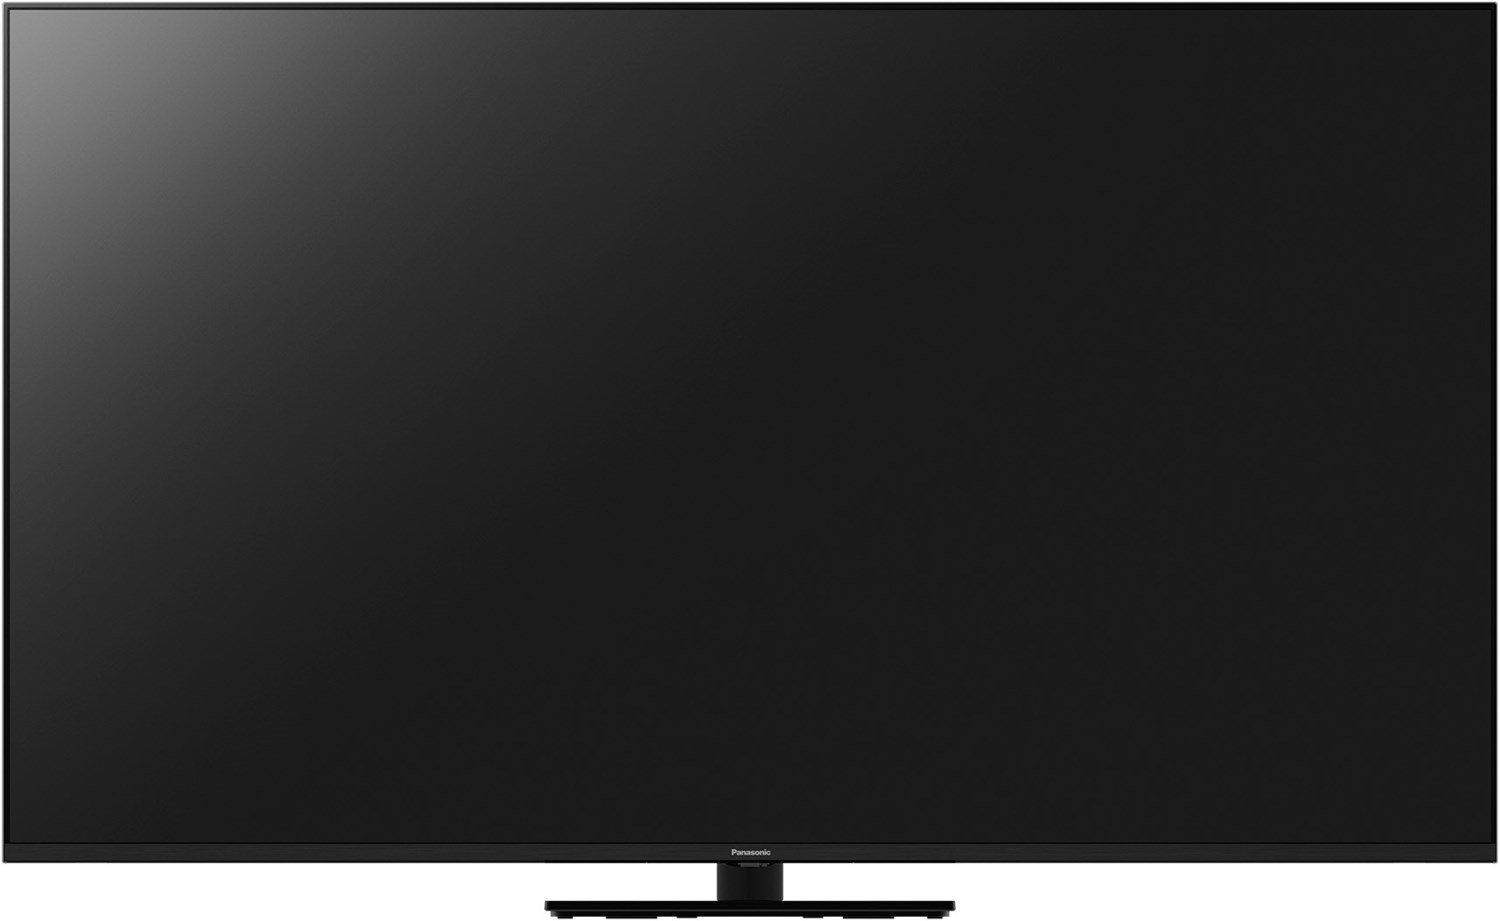 Panasonic 65 Zoll (164 cm) UHD Smart TV schwarz